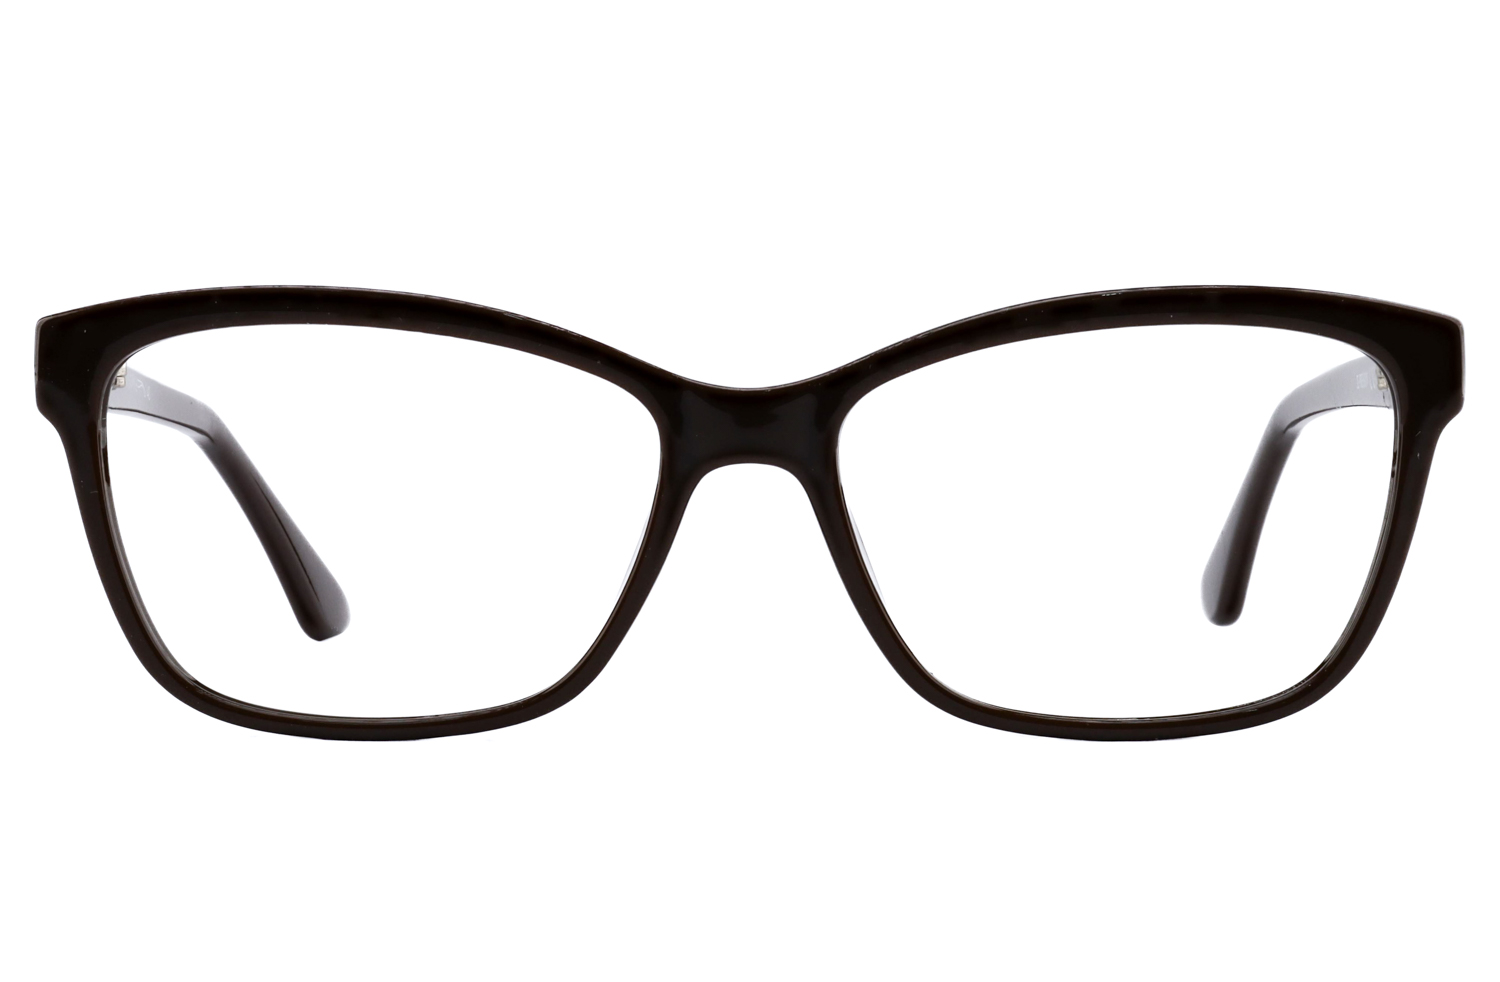 Expression Prescription Glasses Frames Online - Spec-Savers South Africa